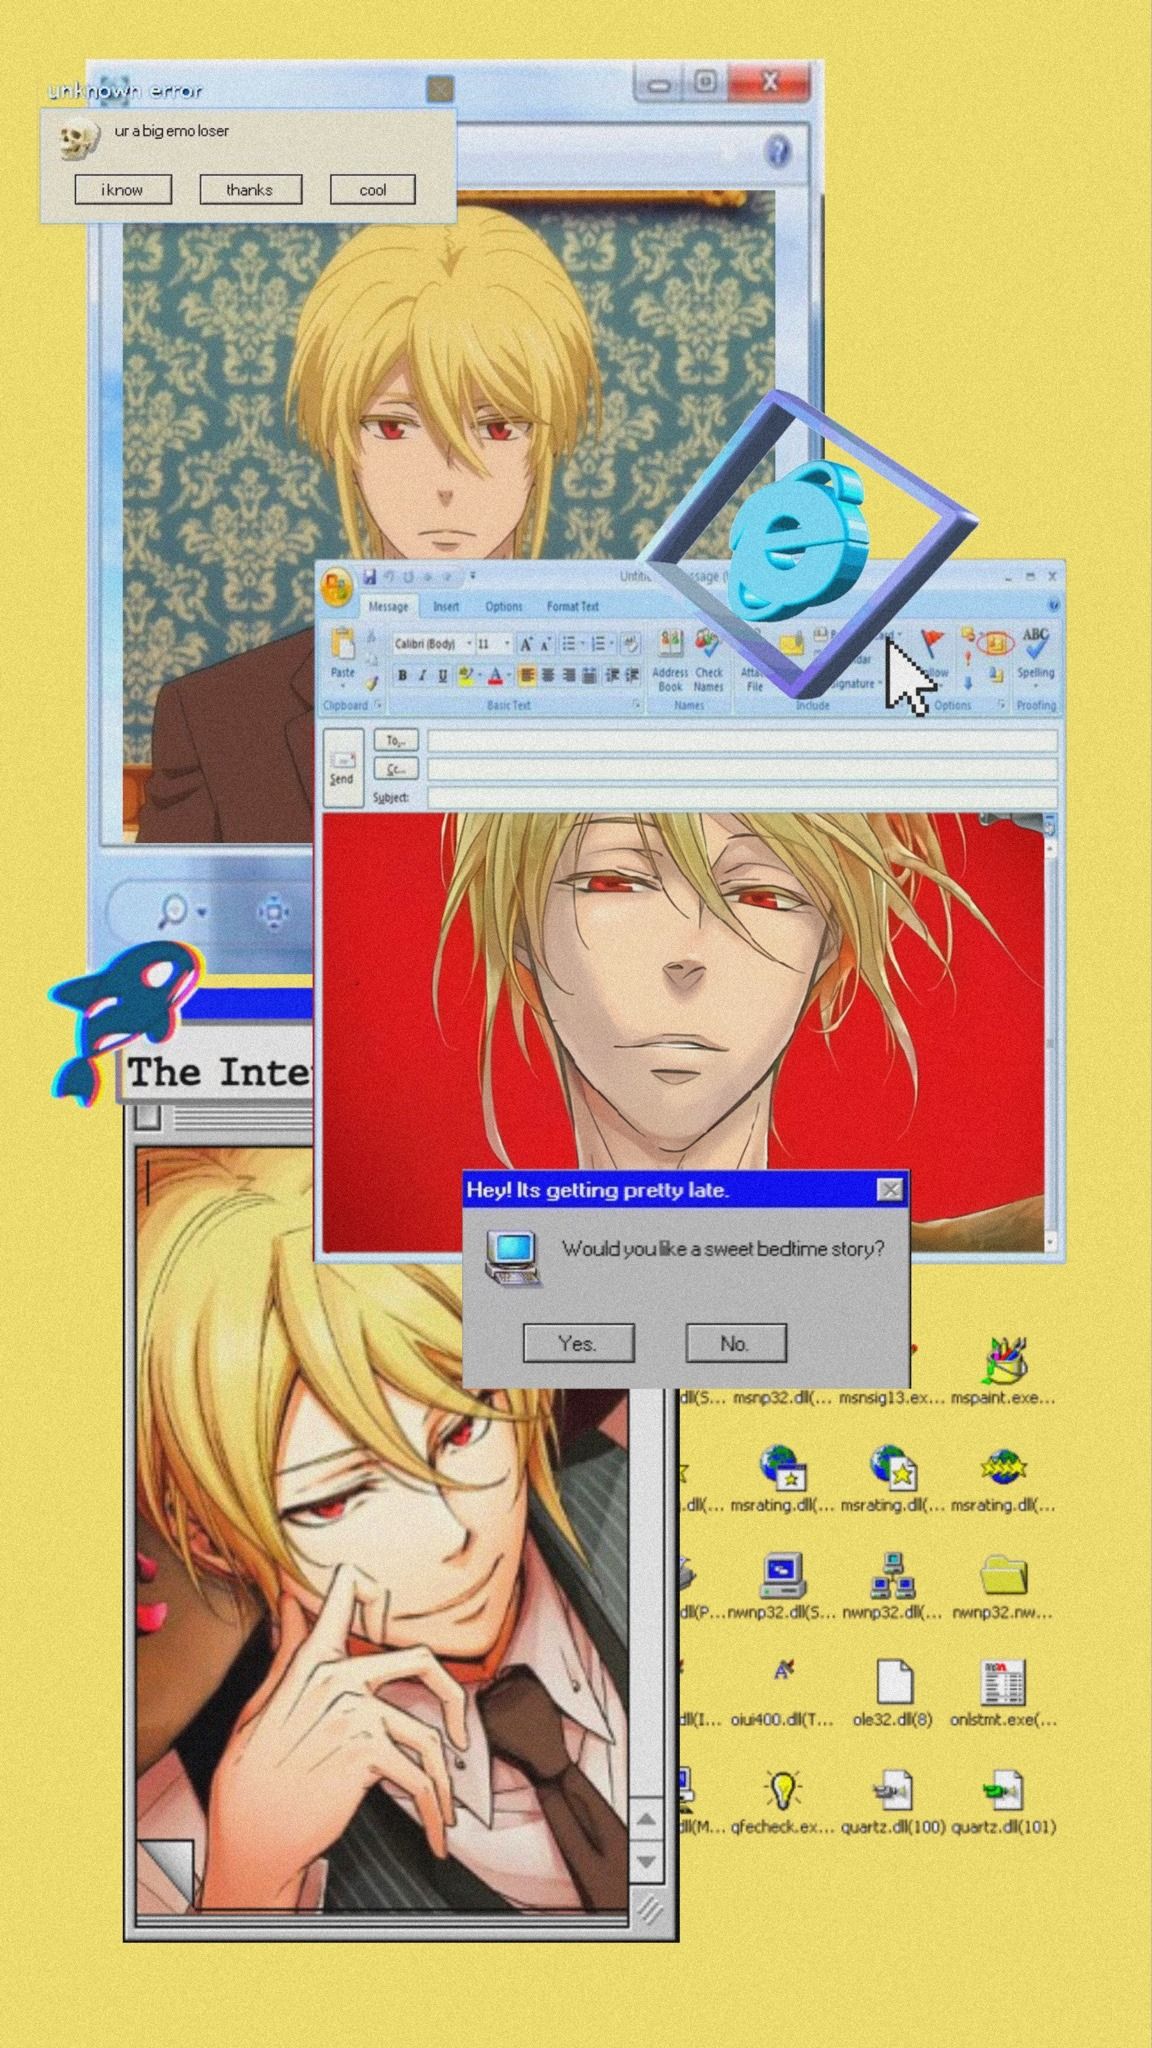 Windows XP desktop with anime images on the desktop - Webcore